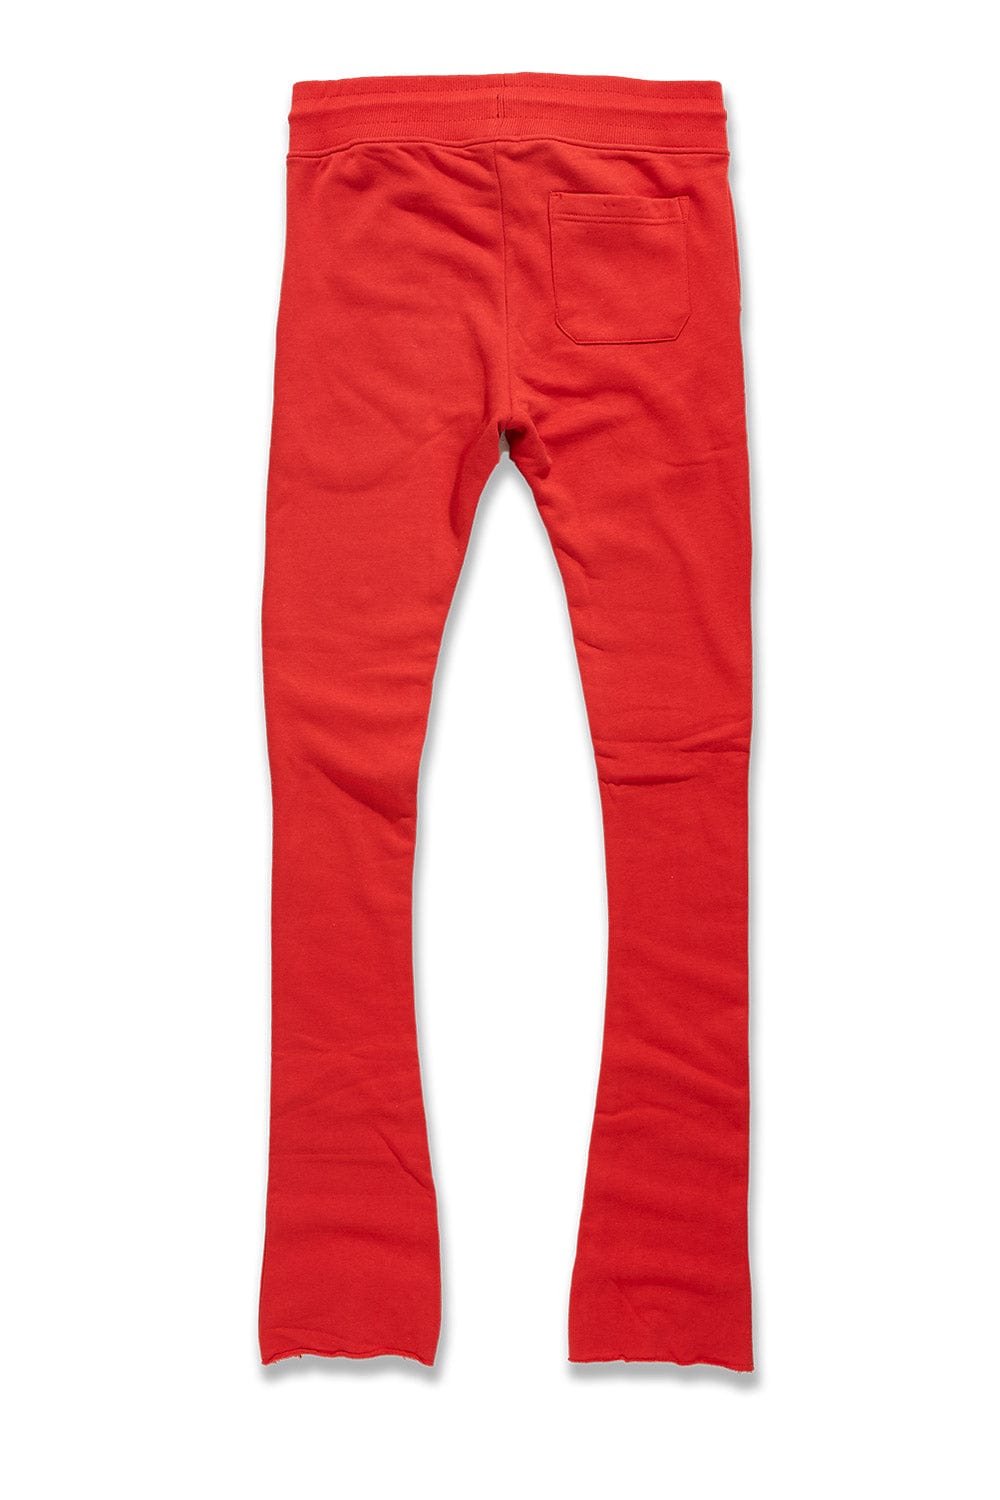 Jordan Craig Uptown Stacked Sweatpants (Red)